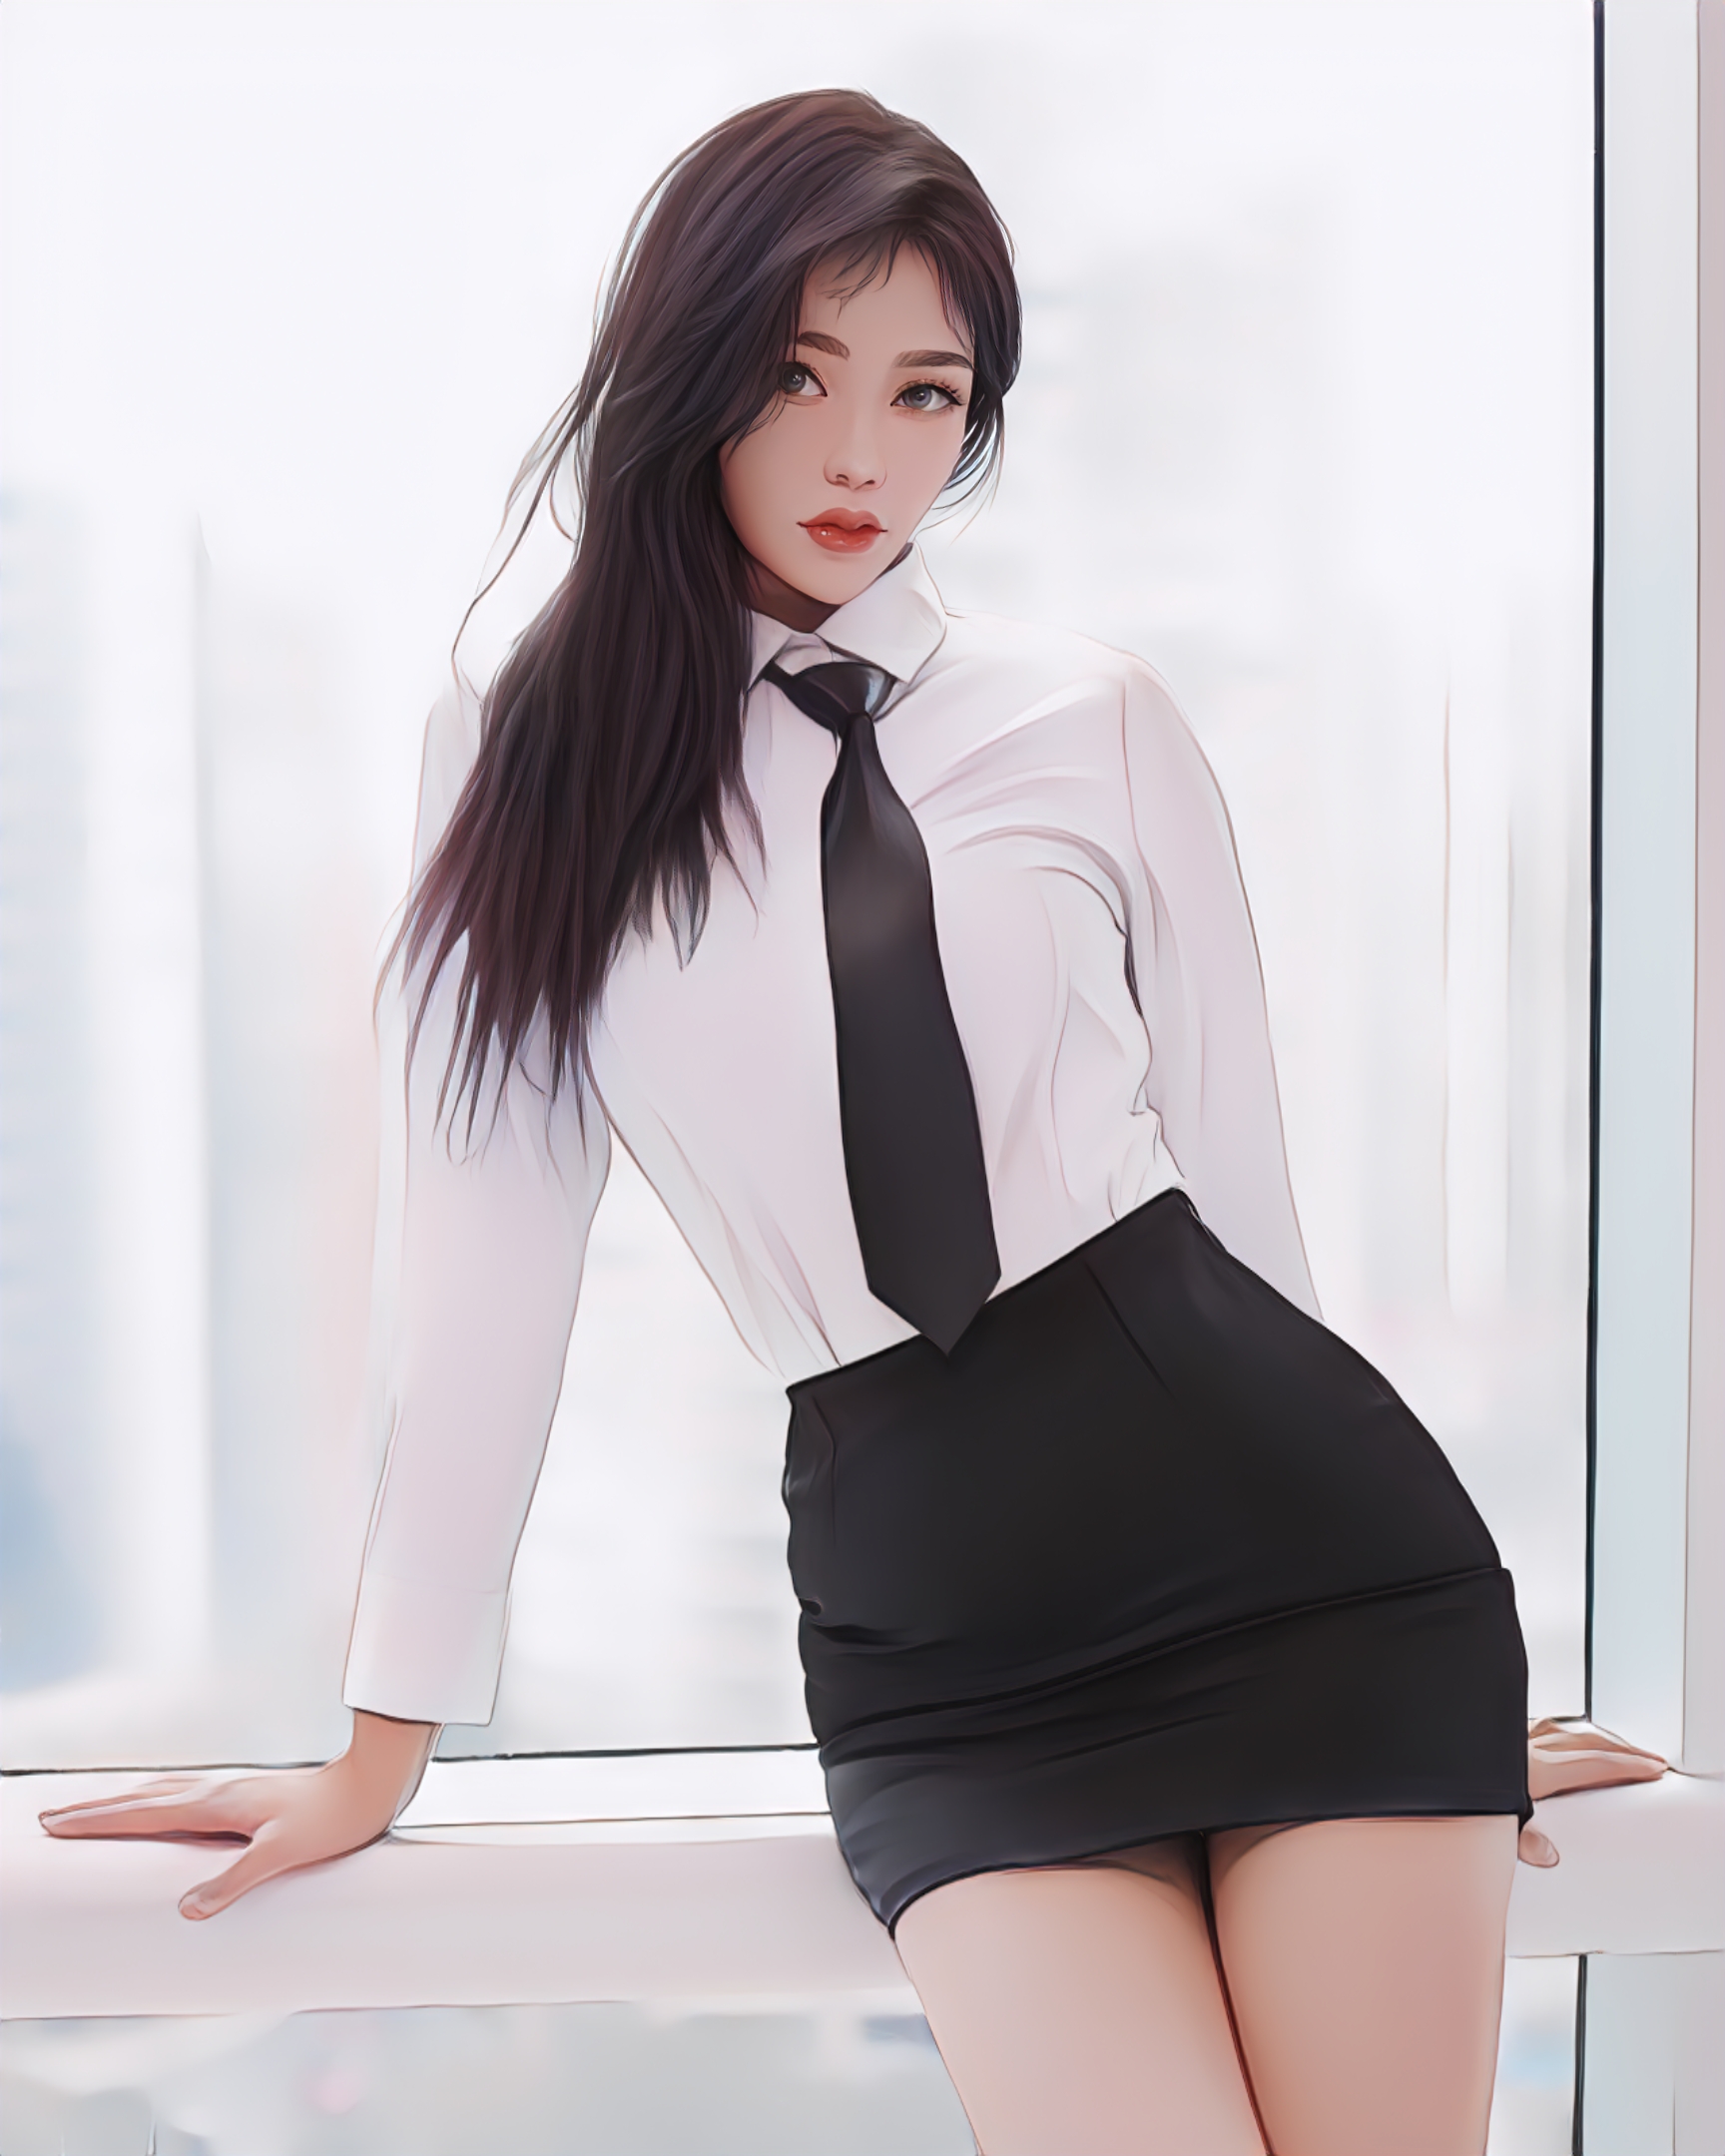 Model Asian Skirt Women Office Girl Vertical Tie Looking At Viewer 1728x2160